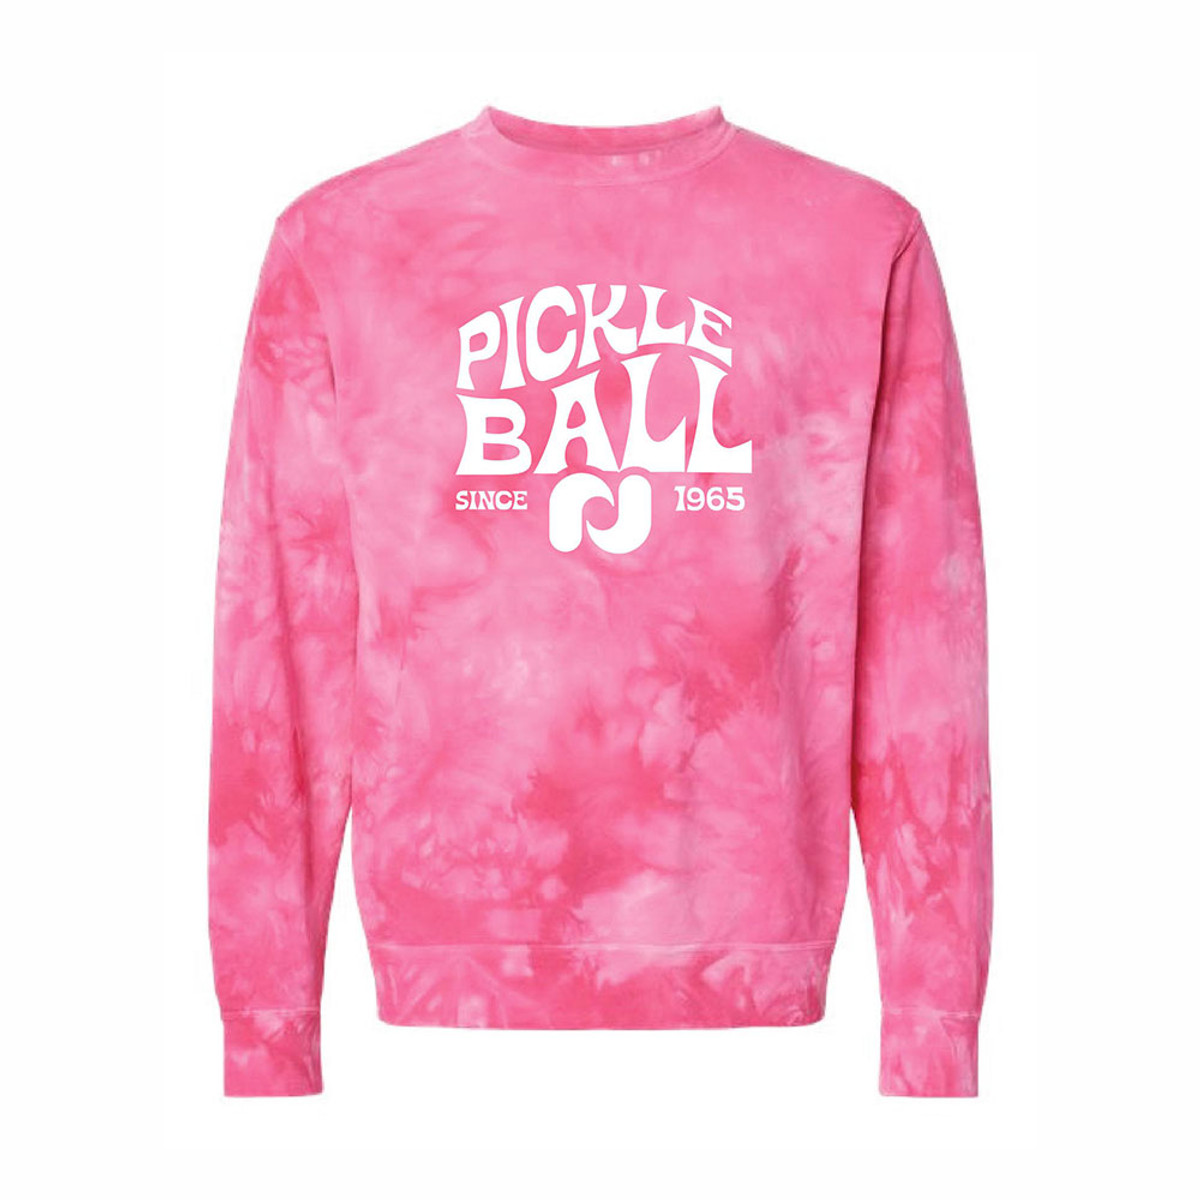 Heritage Pickle-ball Groovy Crew Neck Sweatshirt in Tie-Dye/Hot Pink